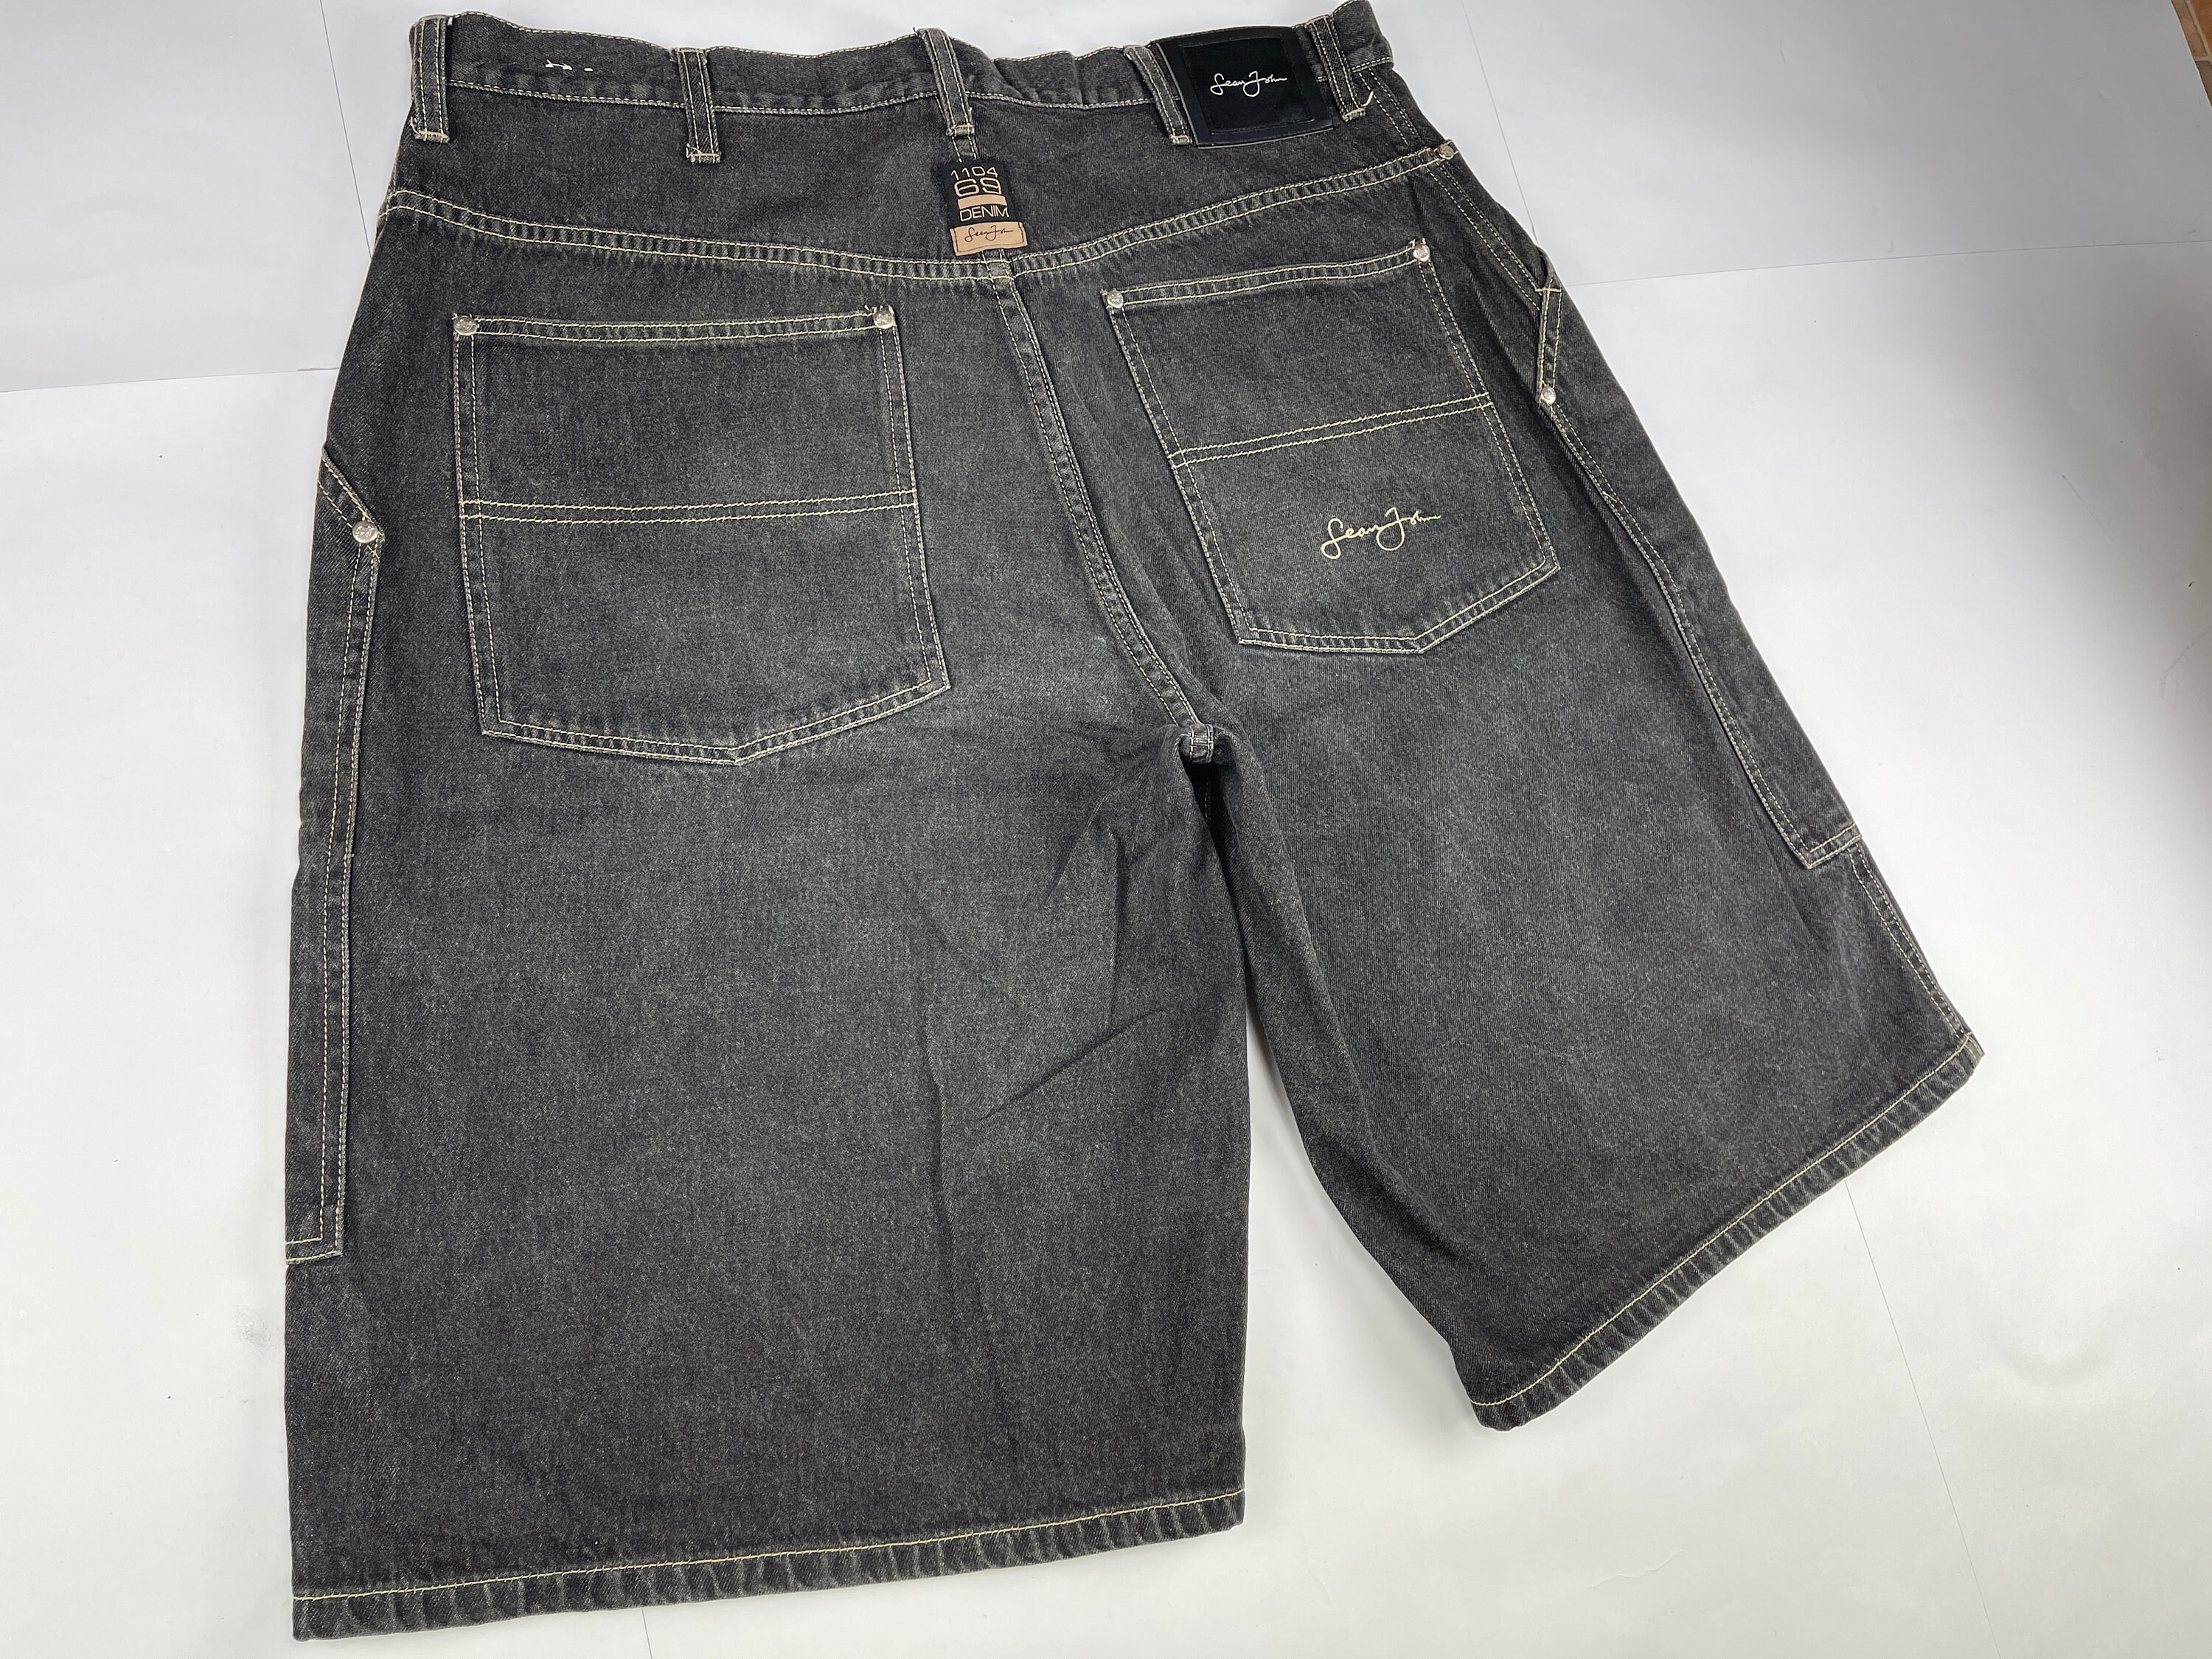 Sean John shorts vintage jeans shorts 90s hip hop clothing | Etsy